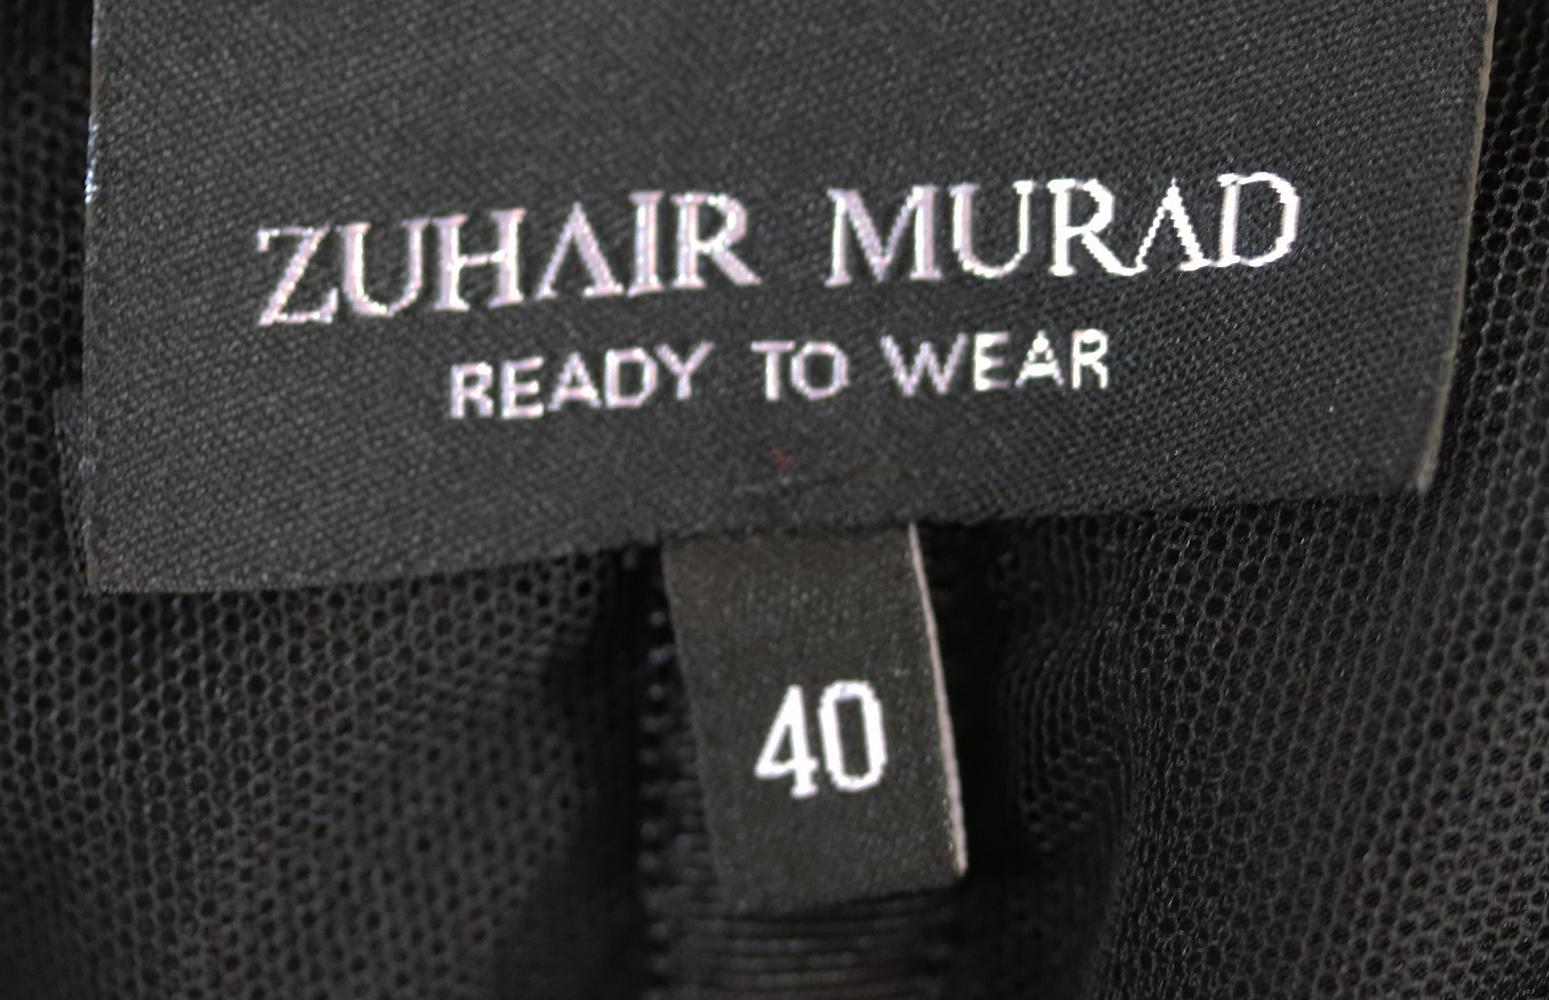 zuhair murad black gown